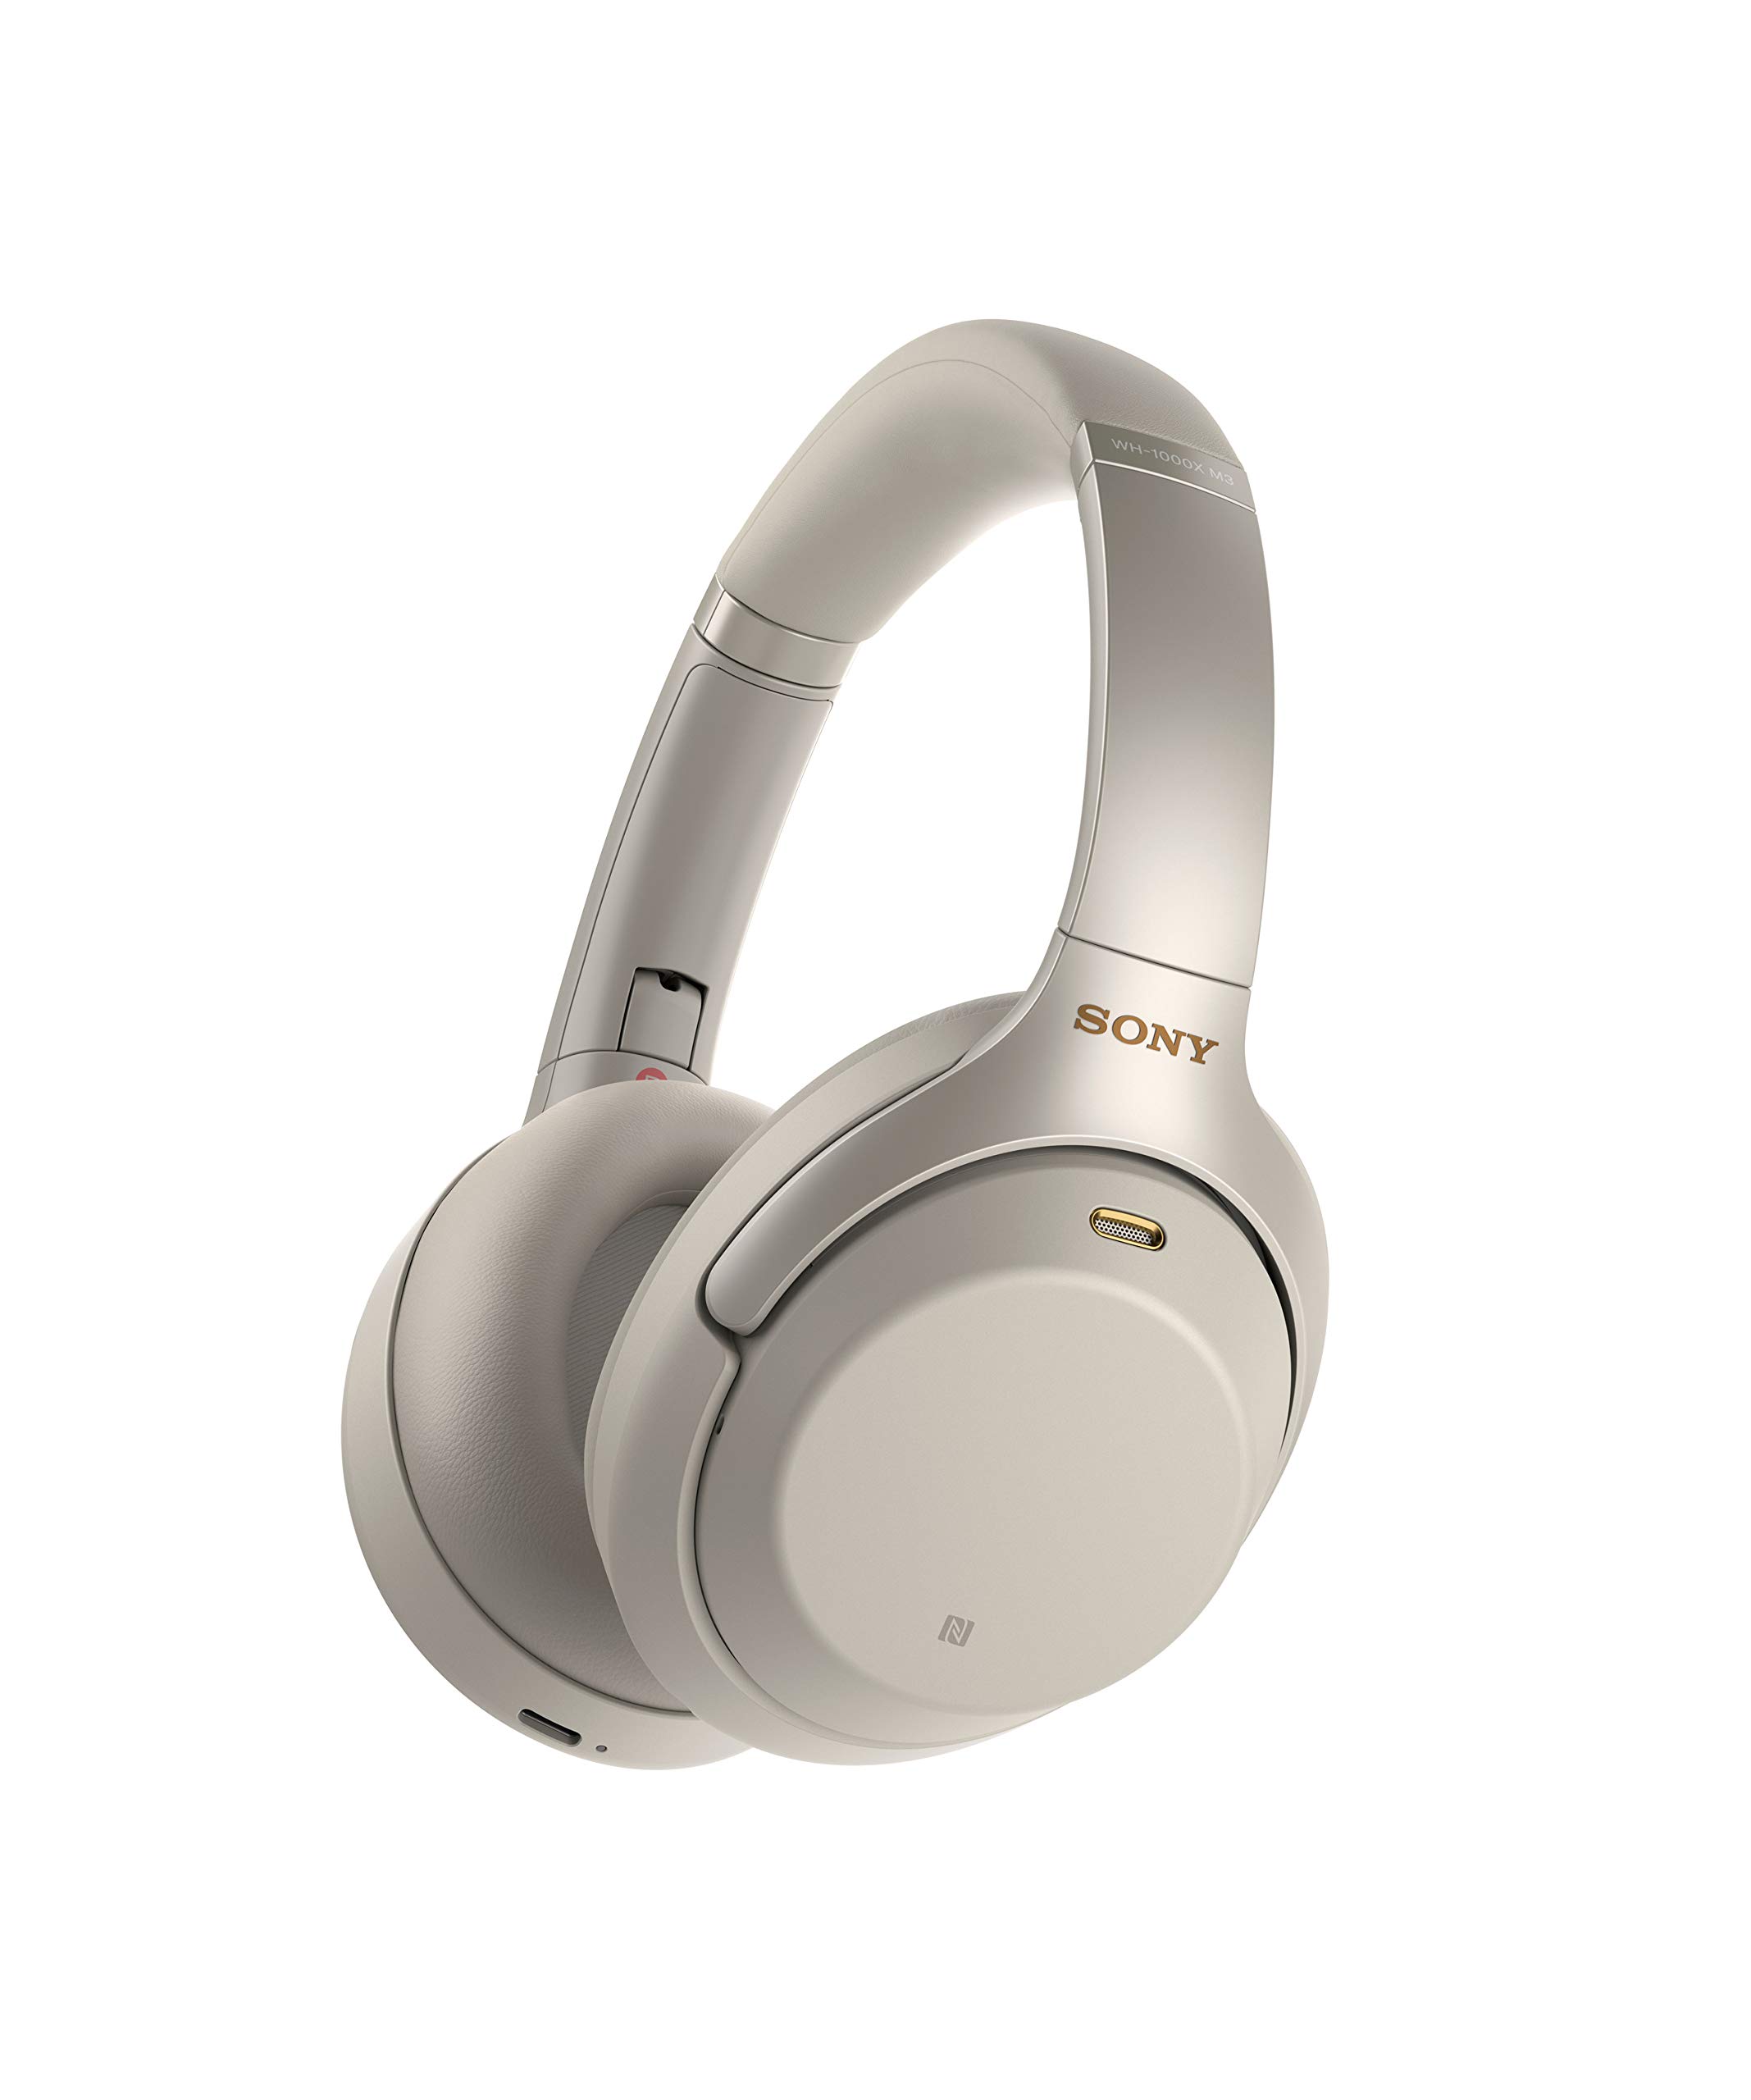 Sony WH-1000XM3 Kabelloses Stereo-Headset mit Geräuschunterdrückung (internationale Version/Verkäufergarantie) (Silber)